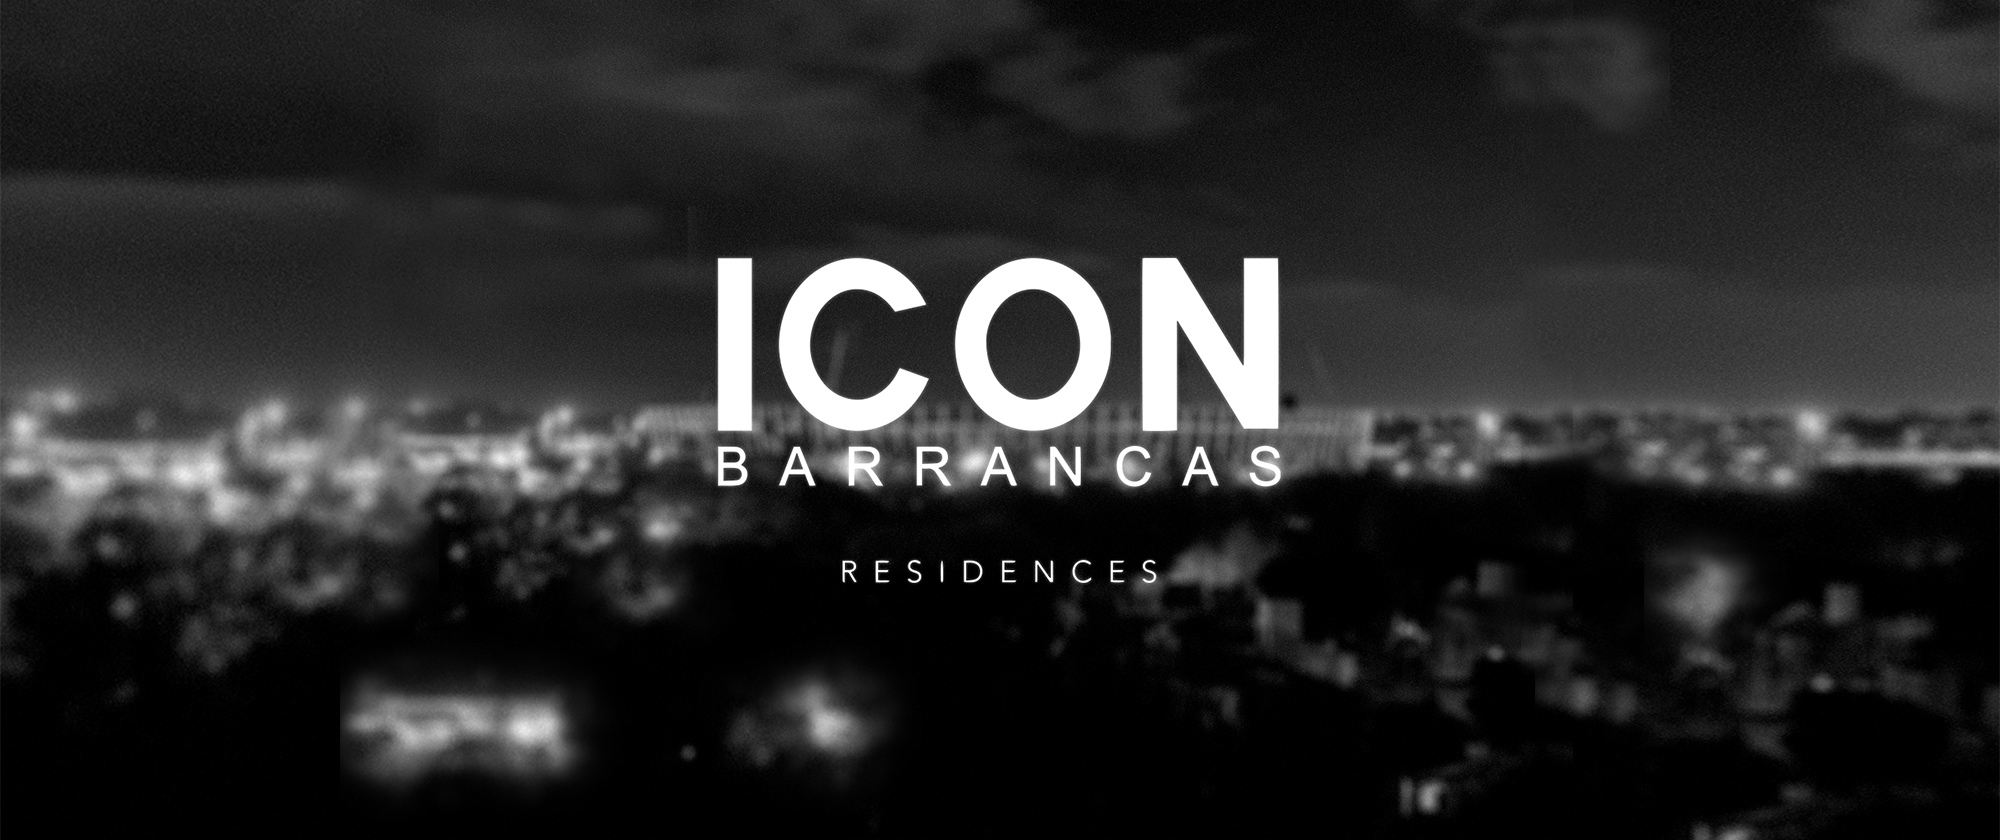 Icon Barrancas